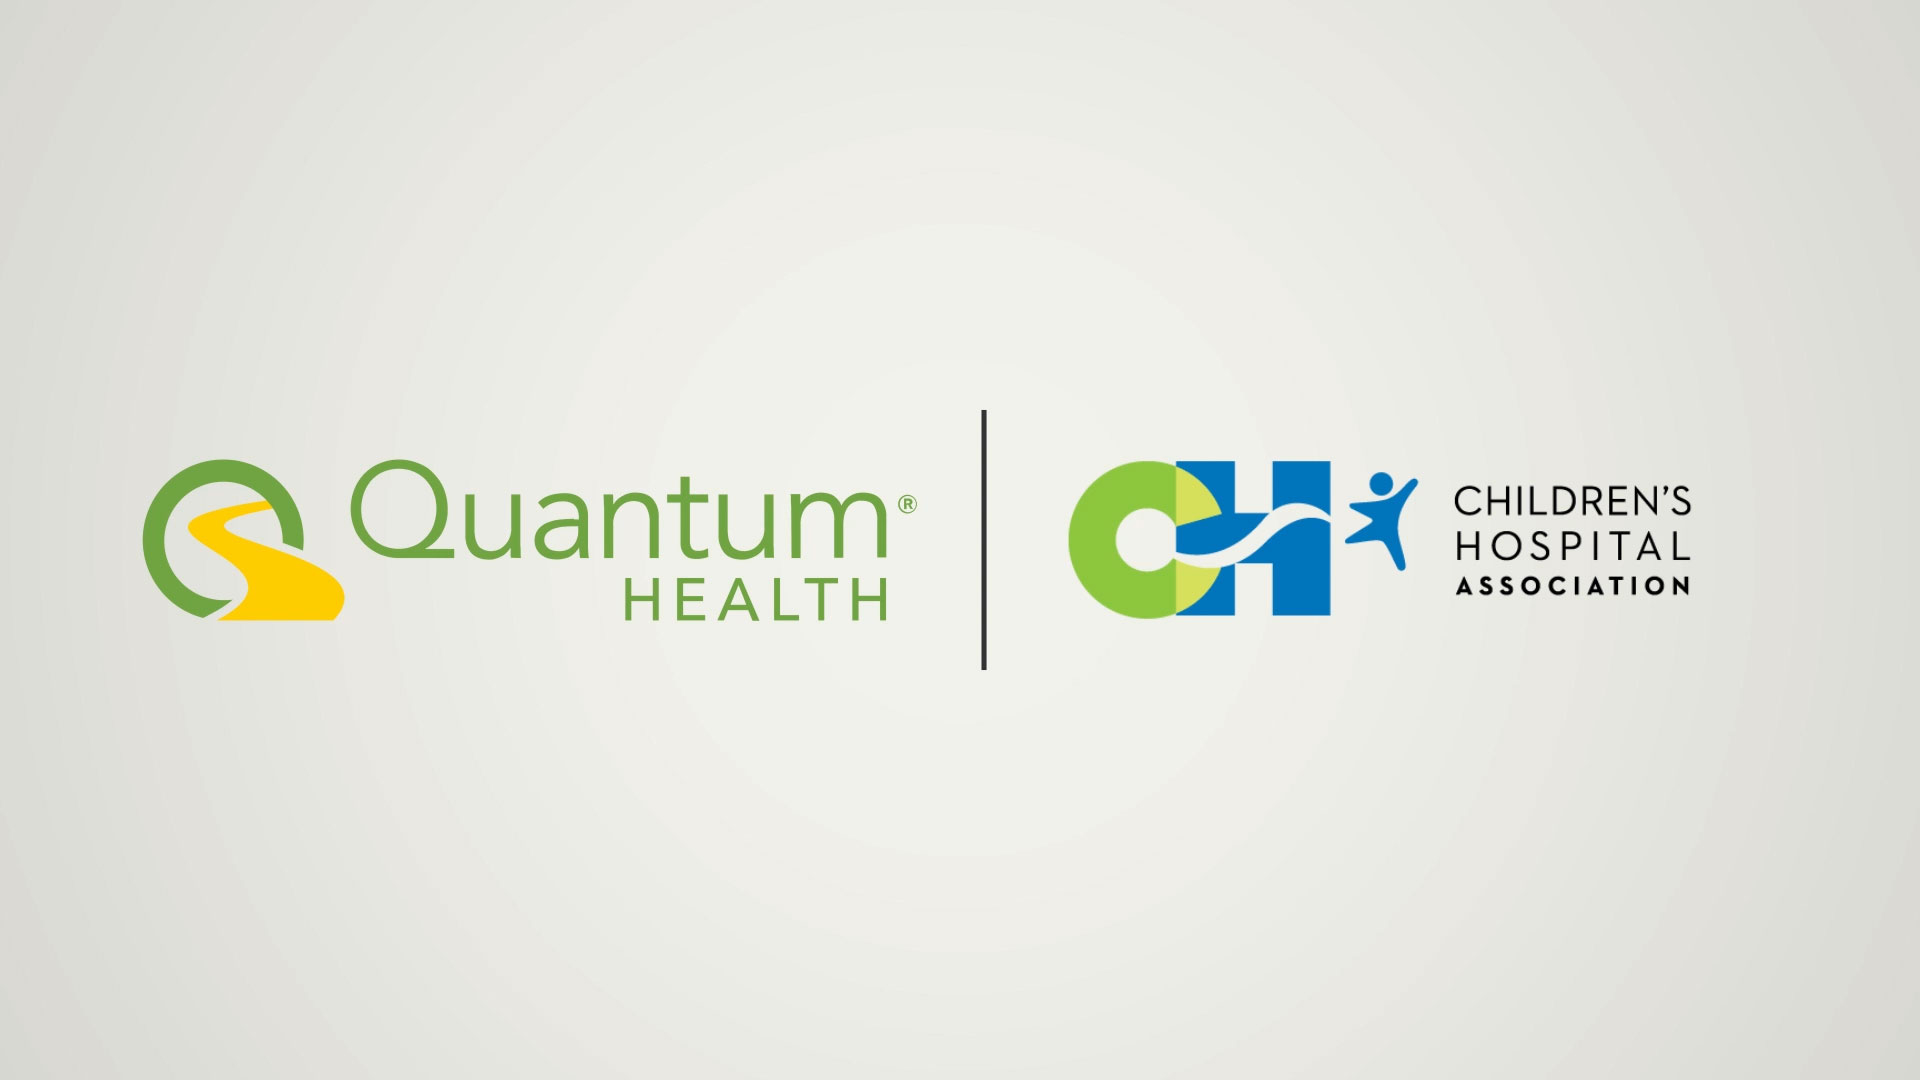 Children’s Hospital Association Joins with Quantum Health to Provide Healthcare Navigation Platform for Membership